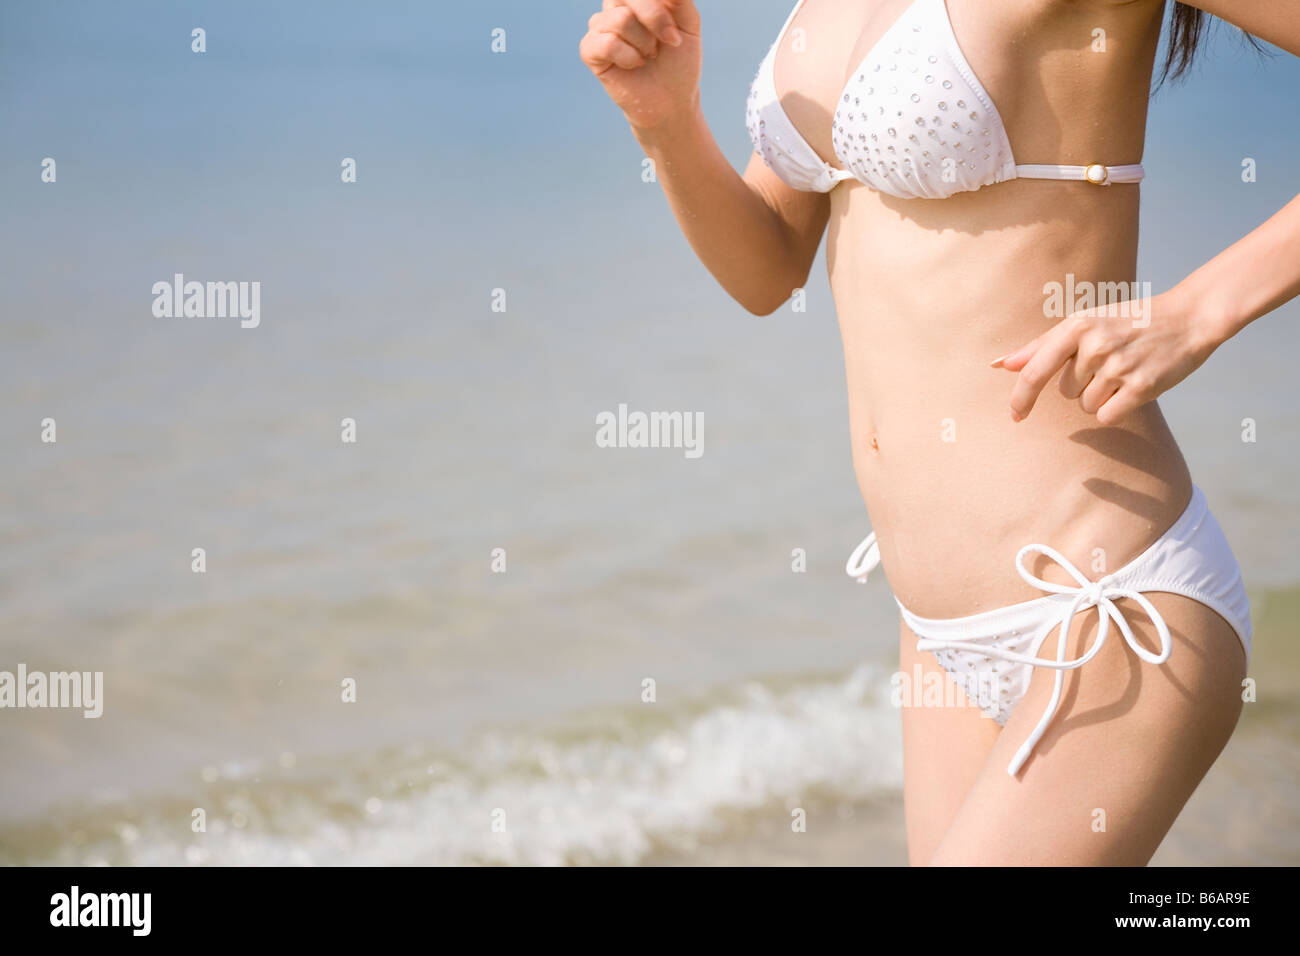 Young japanese woman bikini stock photography and images - Alamy